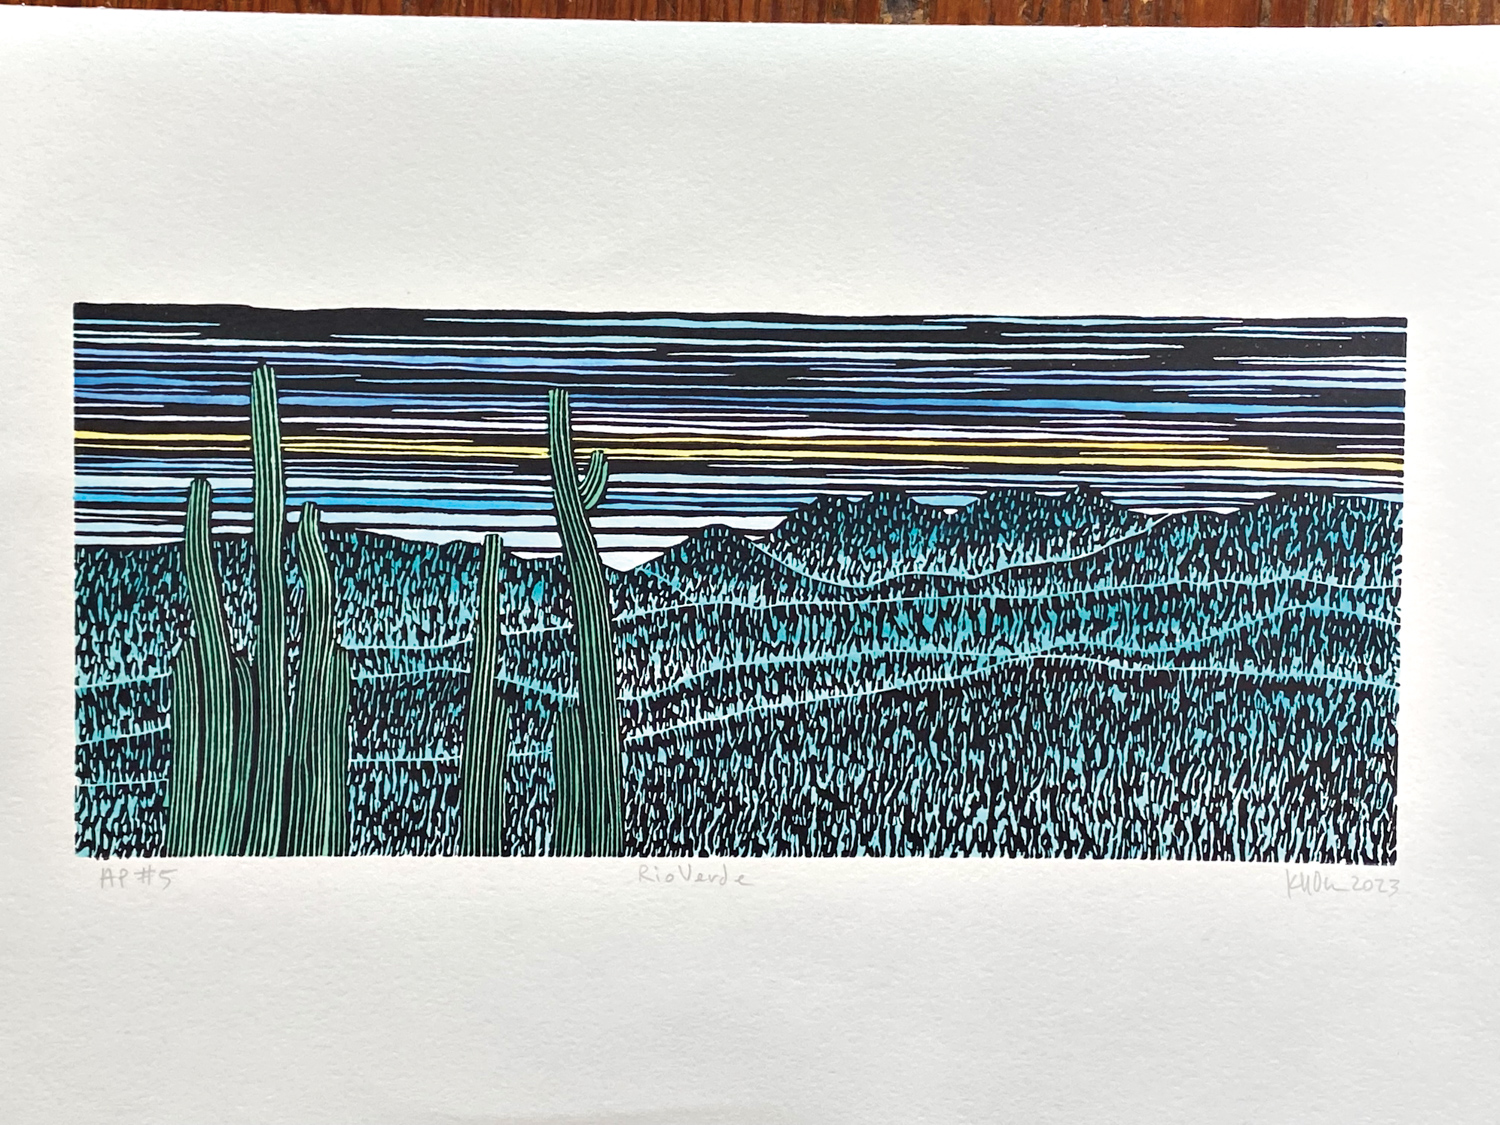 Linoleum block print depicting the desert landscape in blue and green hues